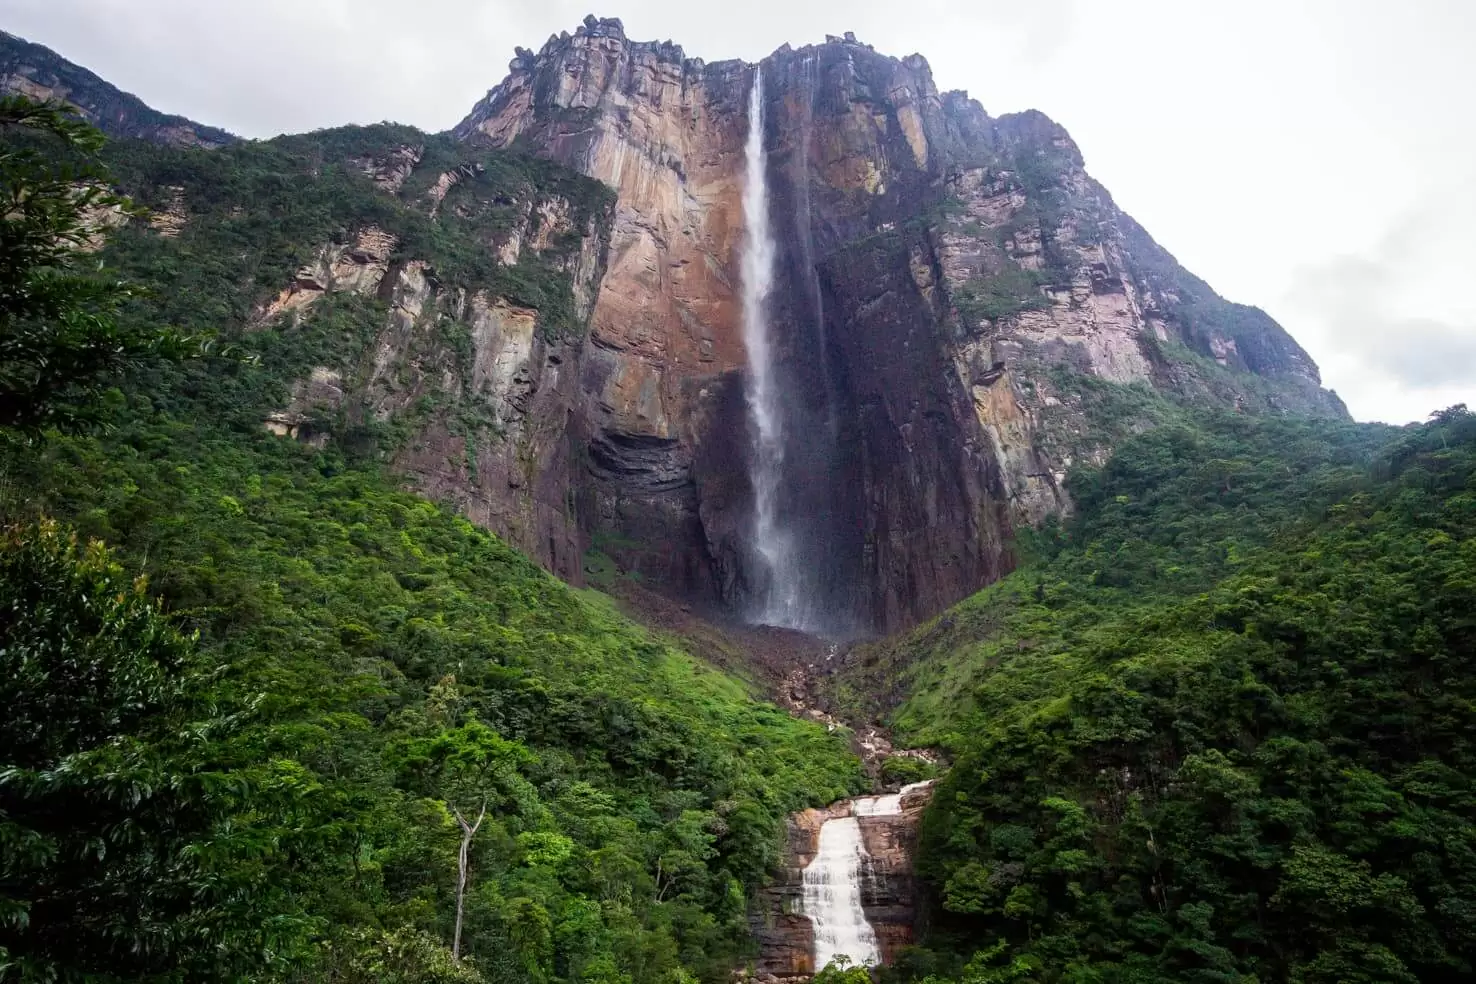 Visit Angel Falls, Venezuela – The Tallest Waterfall in the World